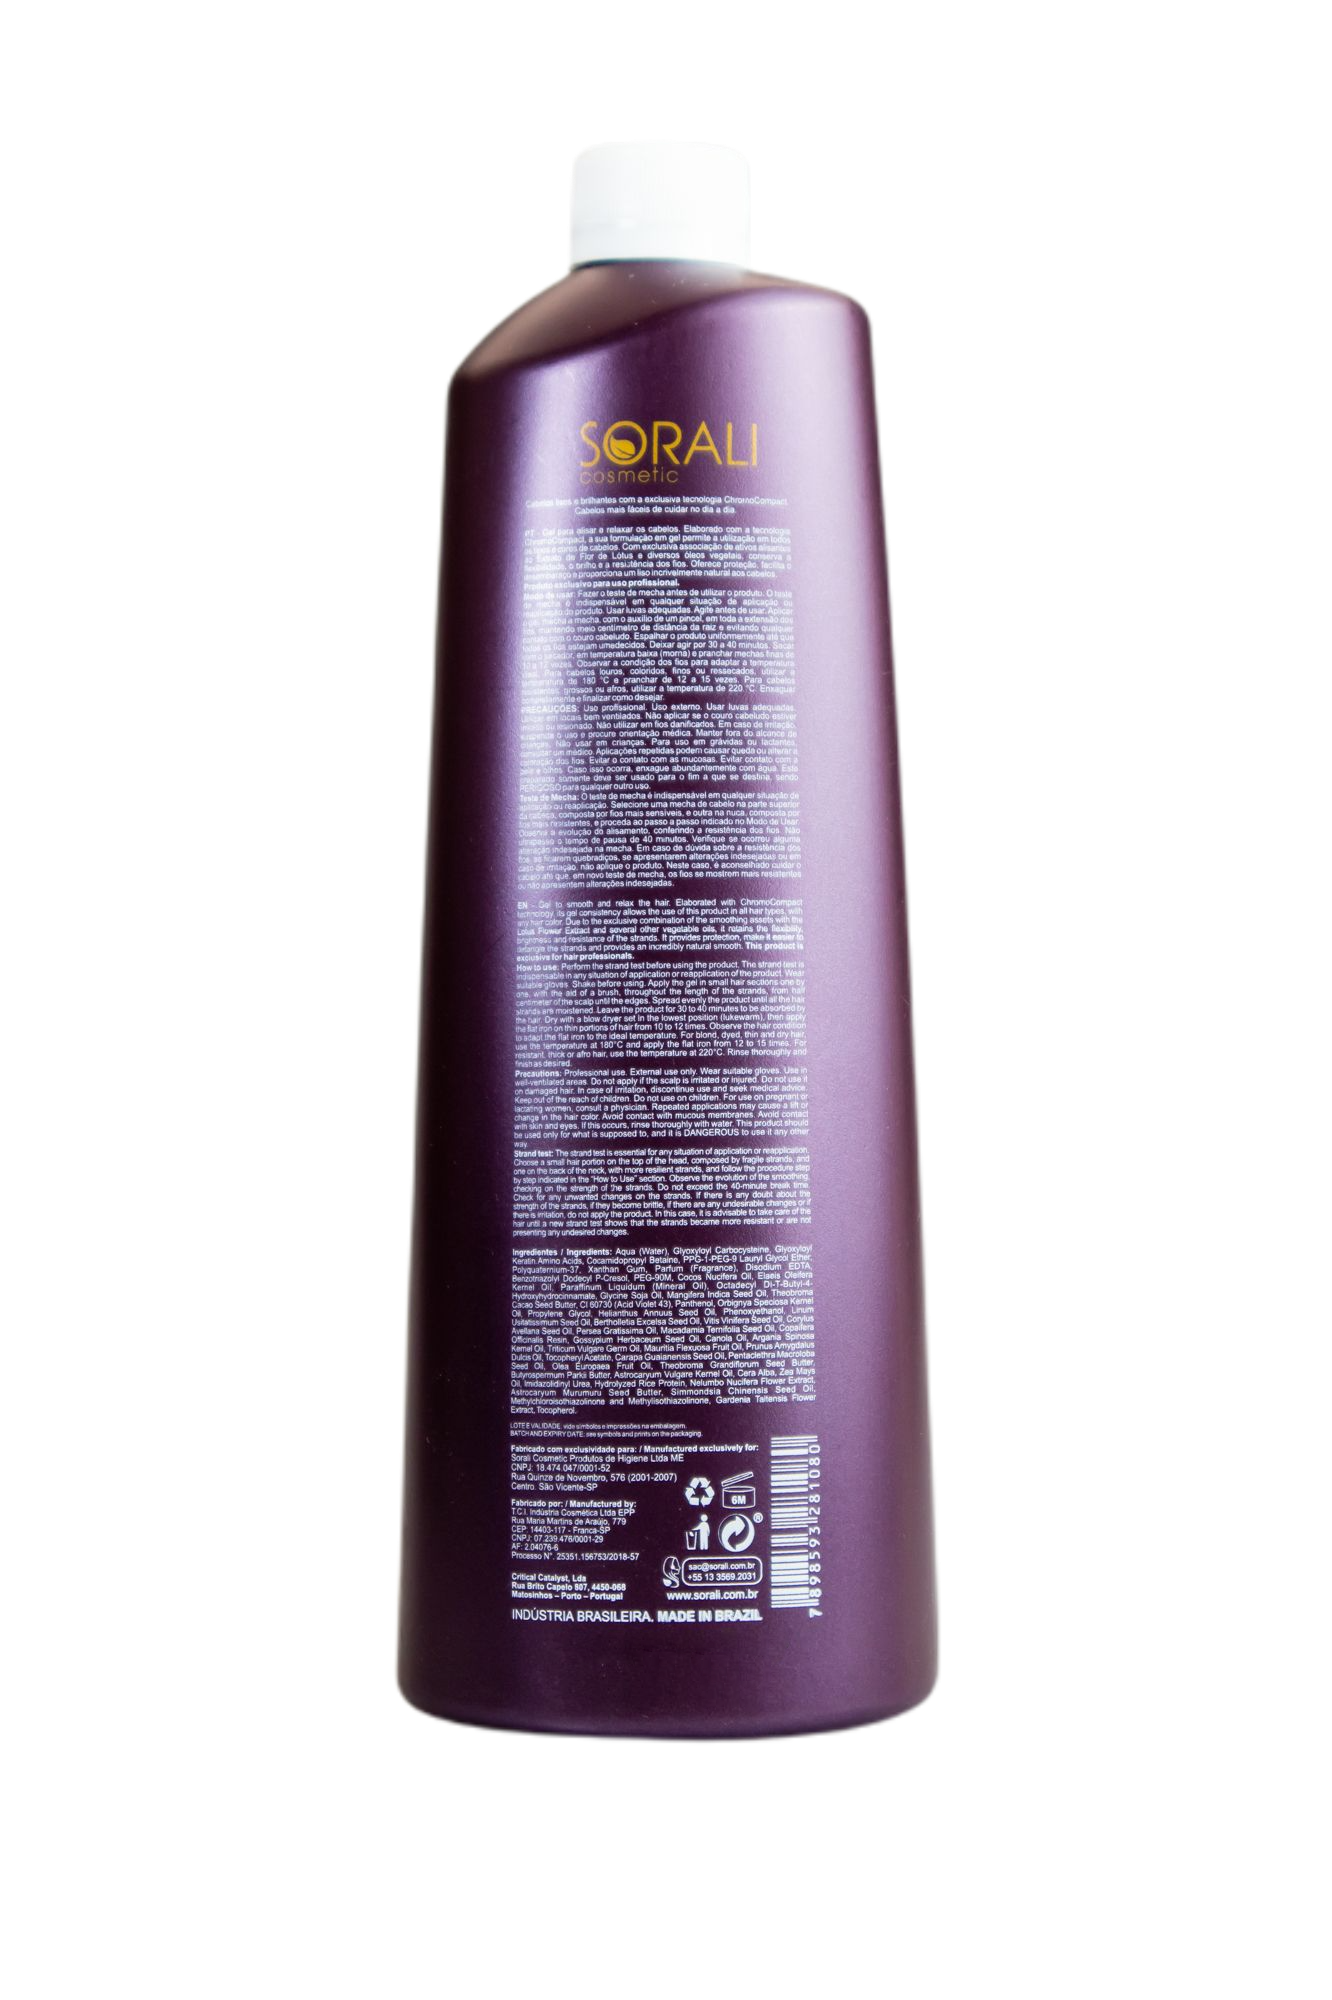 Sorali Professional Brazilian Keratin Sorali - Recovery Gloss Filmo Therapy Brazilian Keratin All Hair Types-- 1L / 33 fl oz